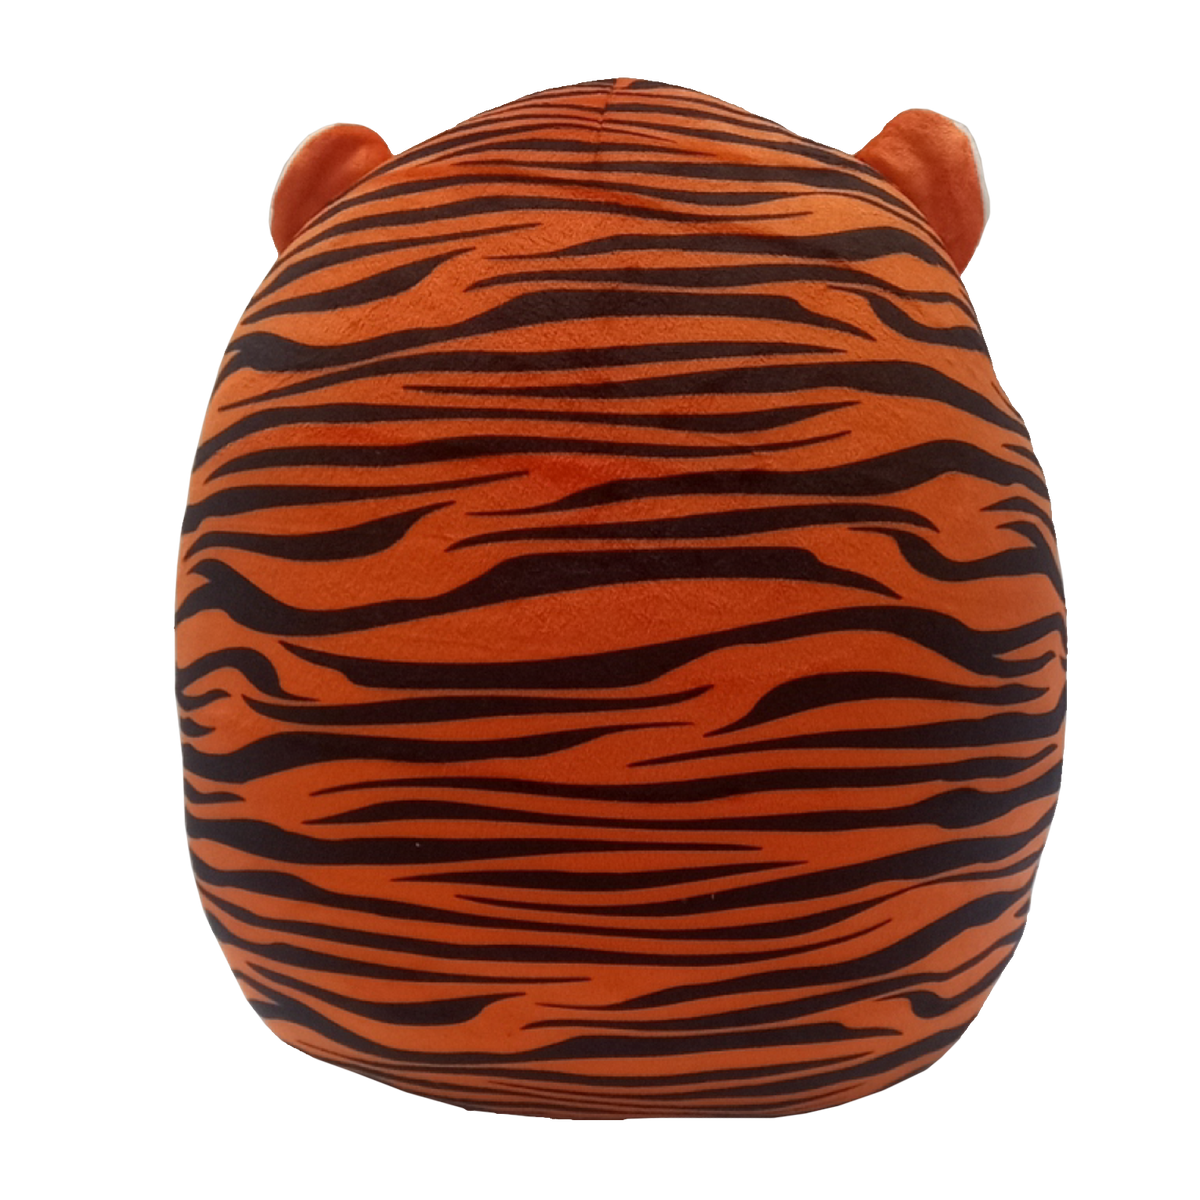 Clemson Tiger Squishy Pillow